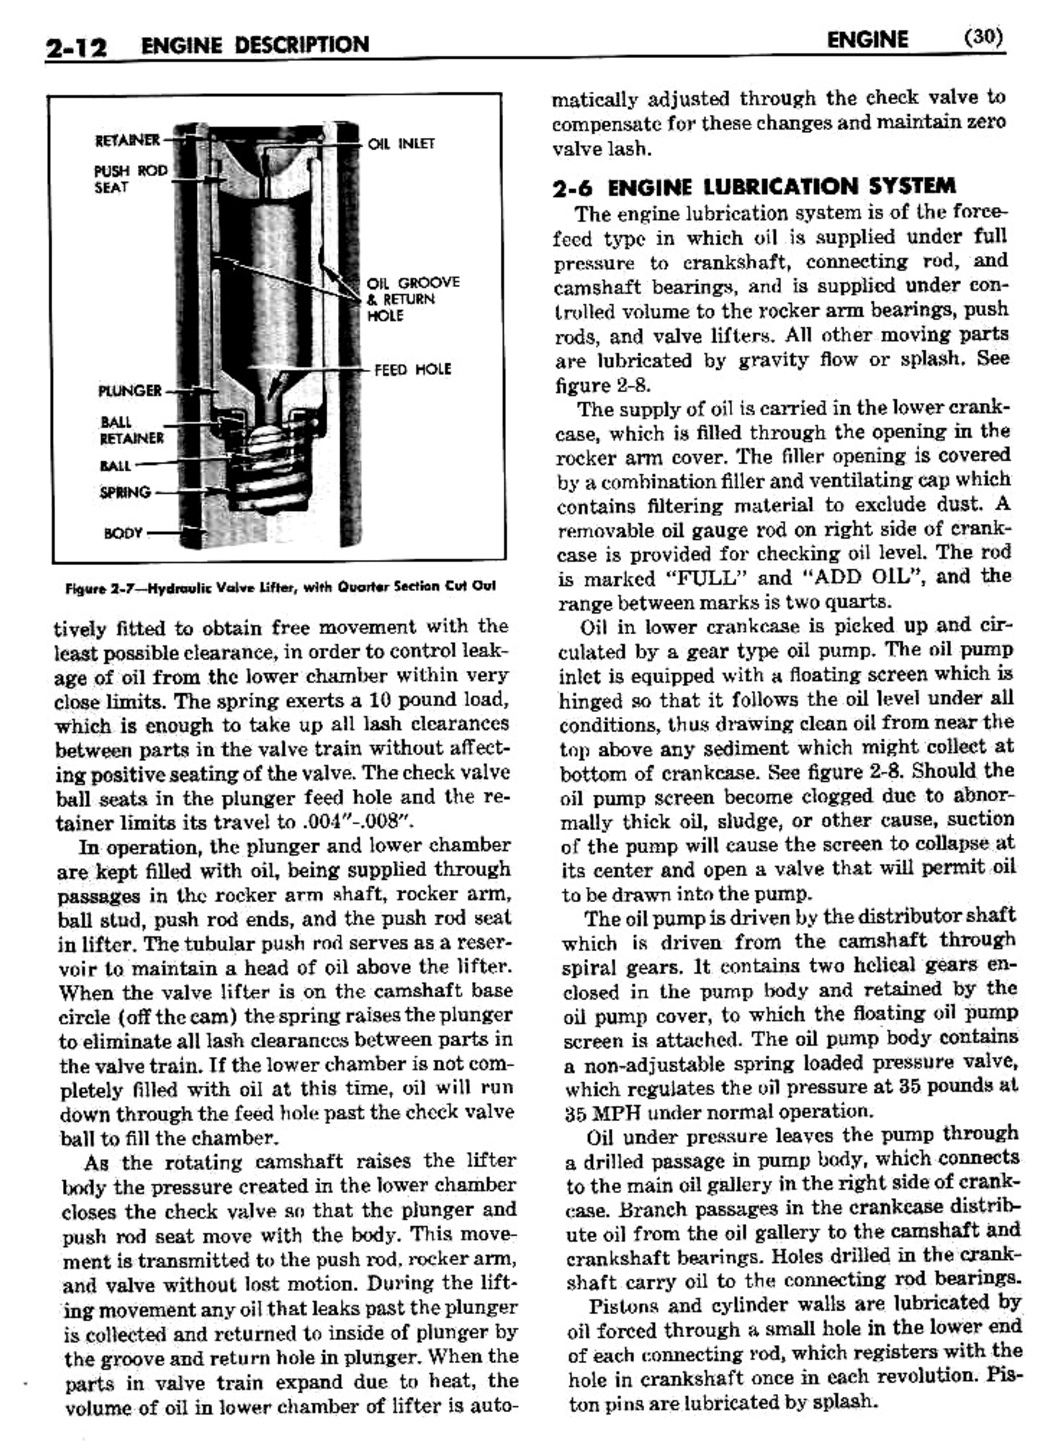 n_03 1950 Buick Shop Manual - Engine-012-012.jpg